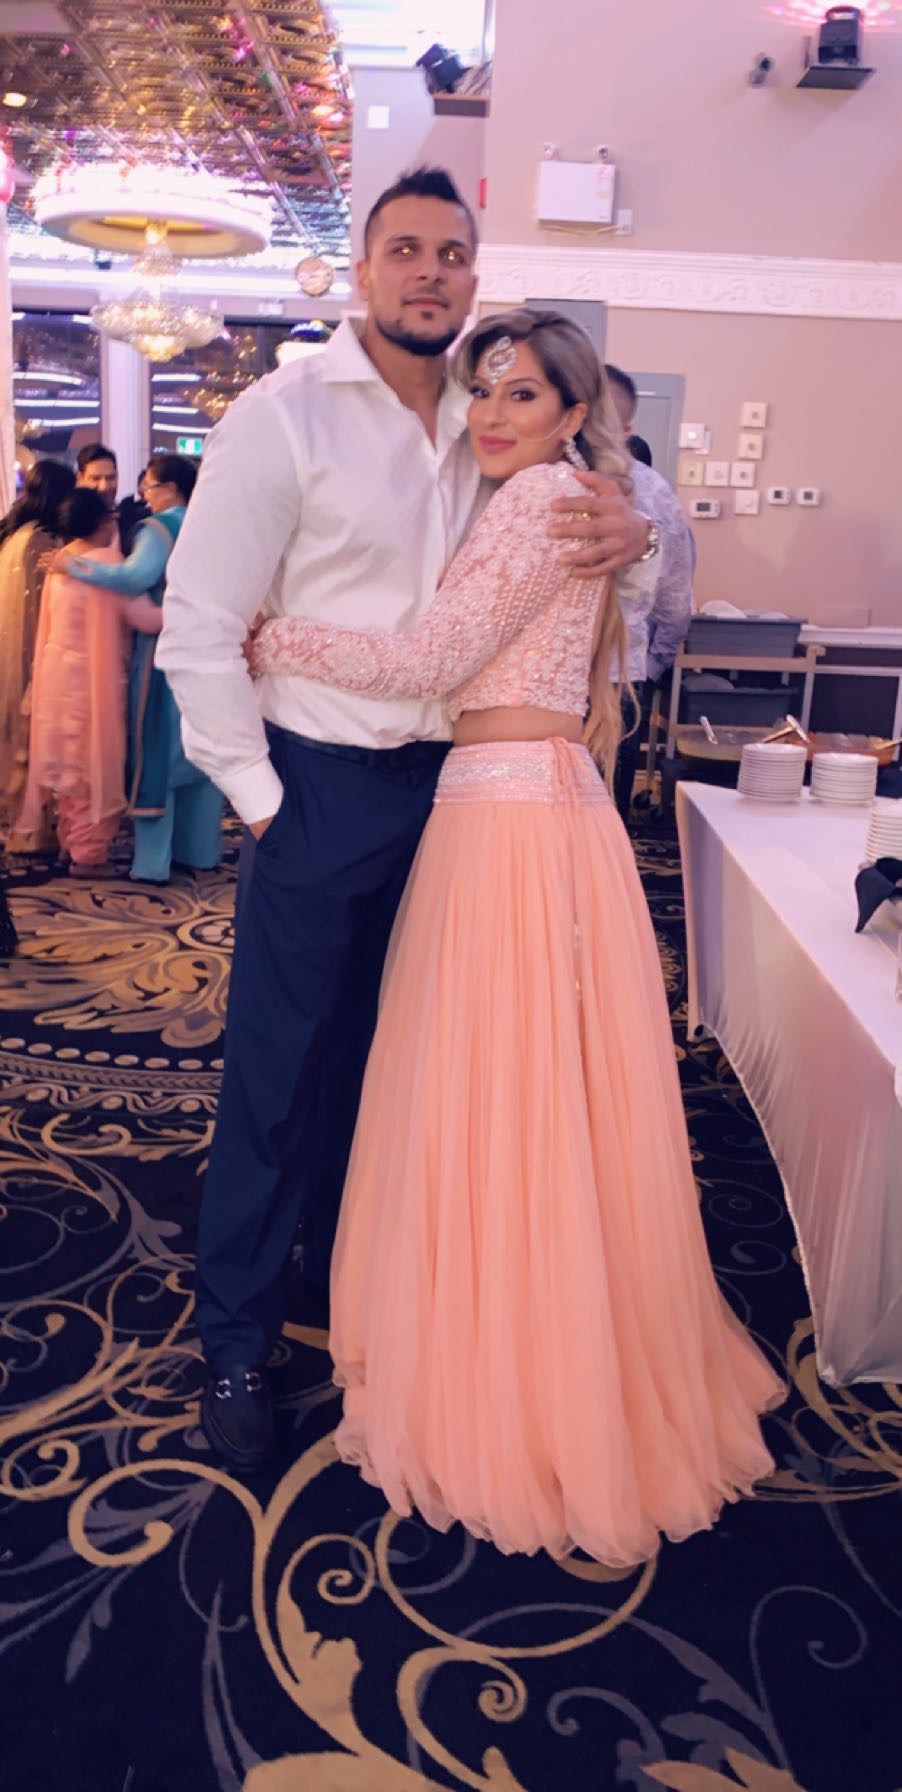 Michael Singh Mann and his sister Rav Mann Johal at a wedding.